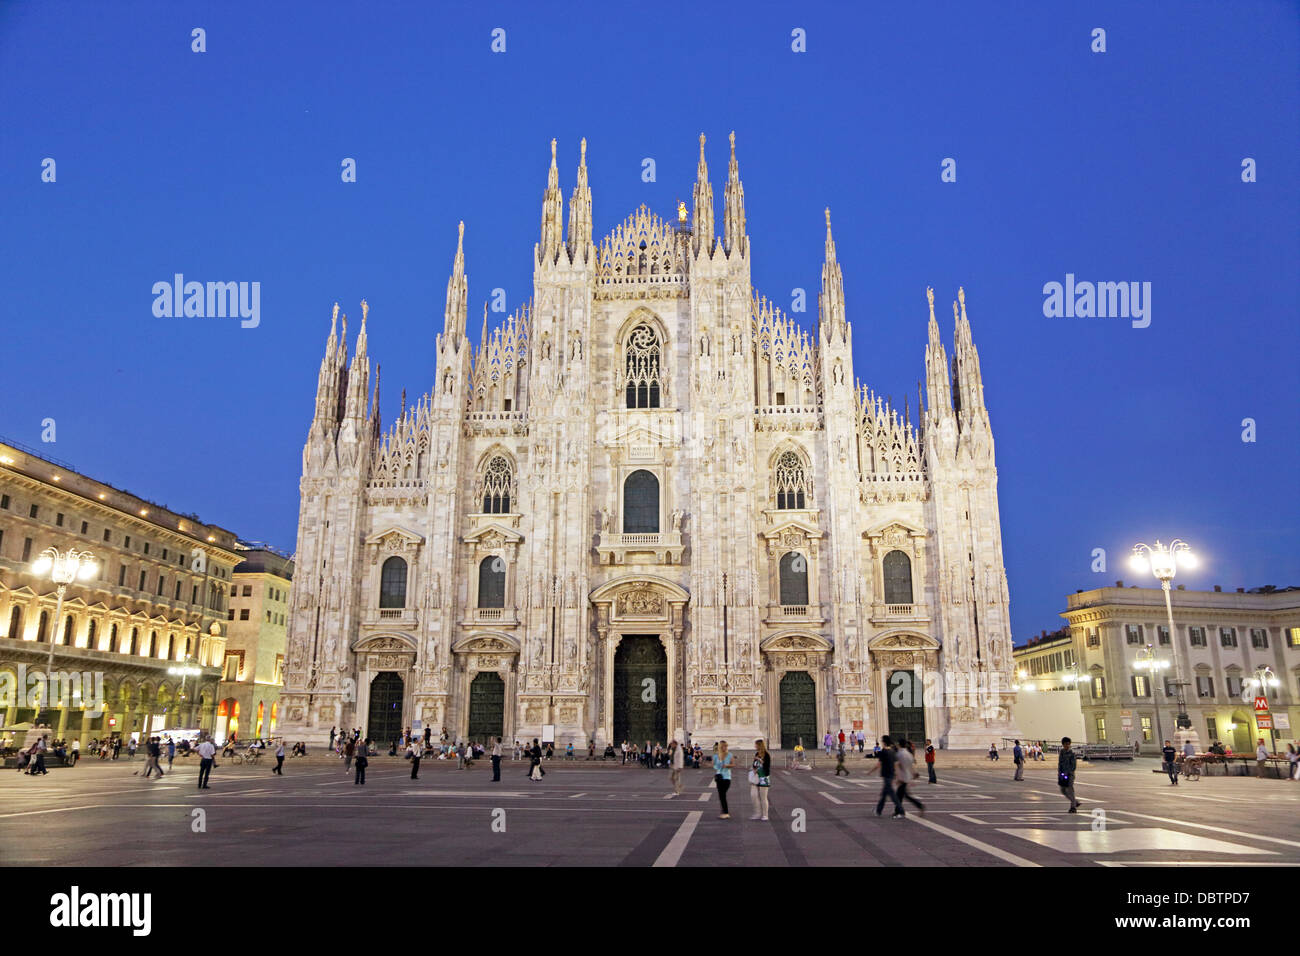 Piazza del Duomo and the facade of the Duomo in Milan Italy Stock Photo